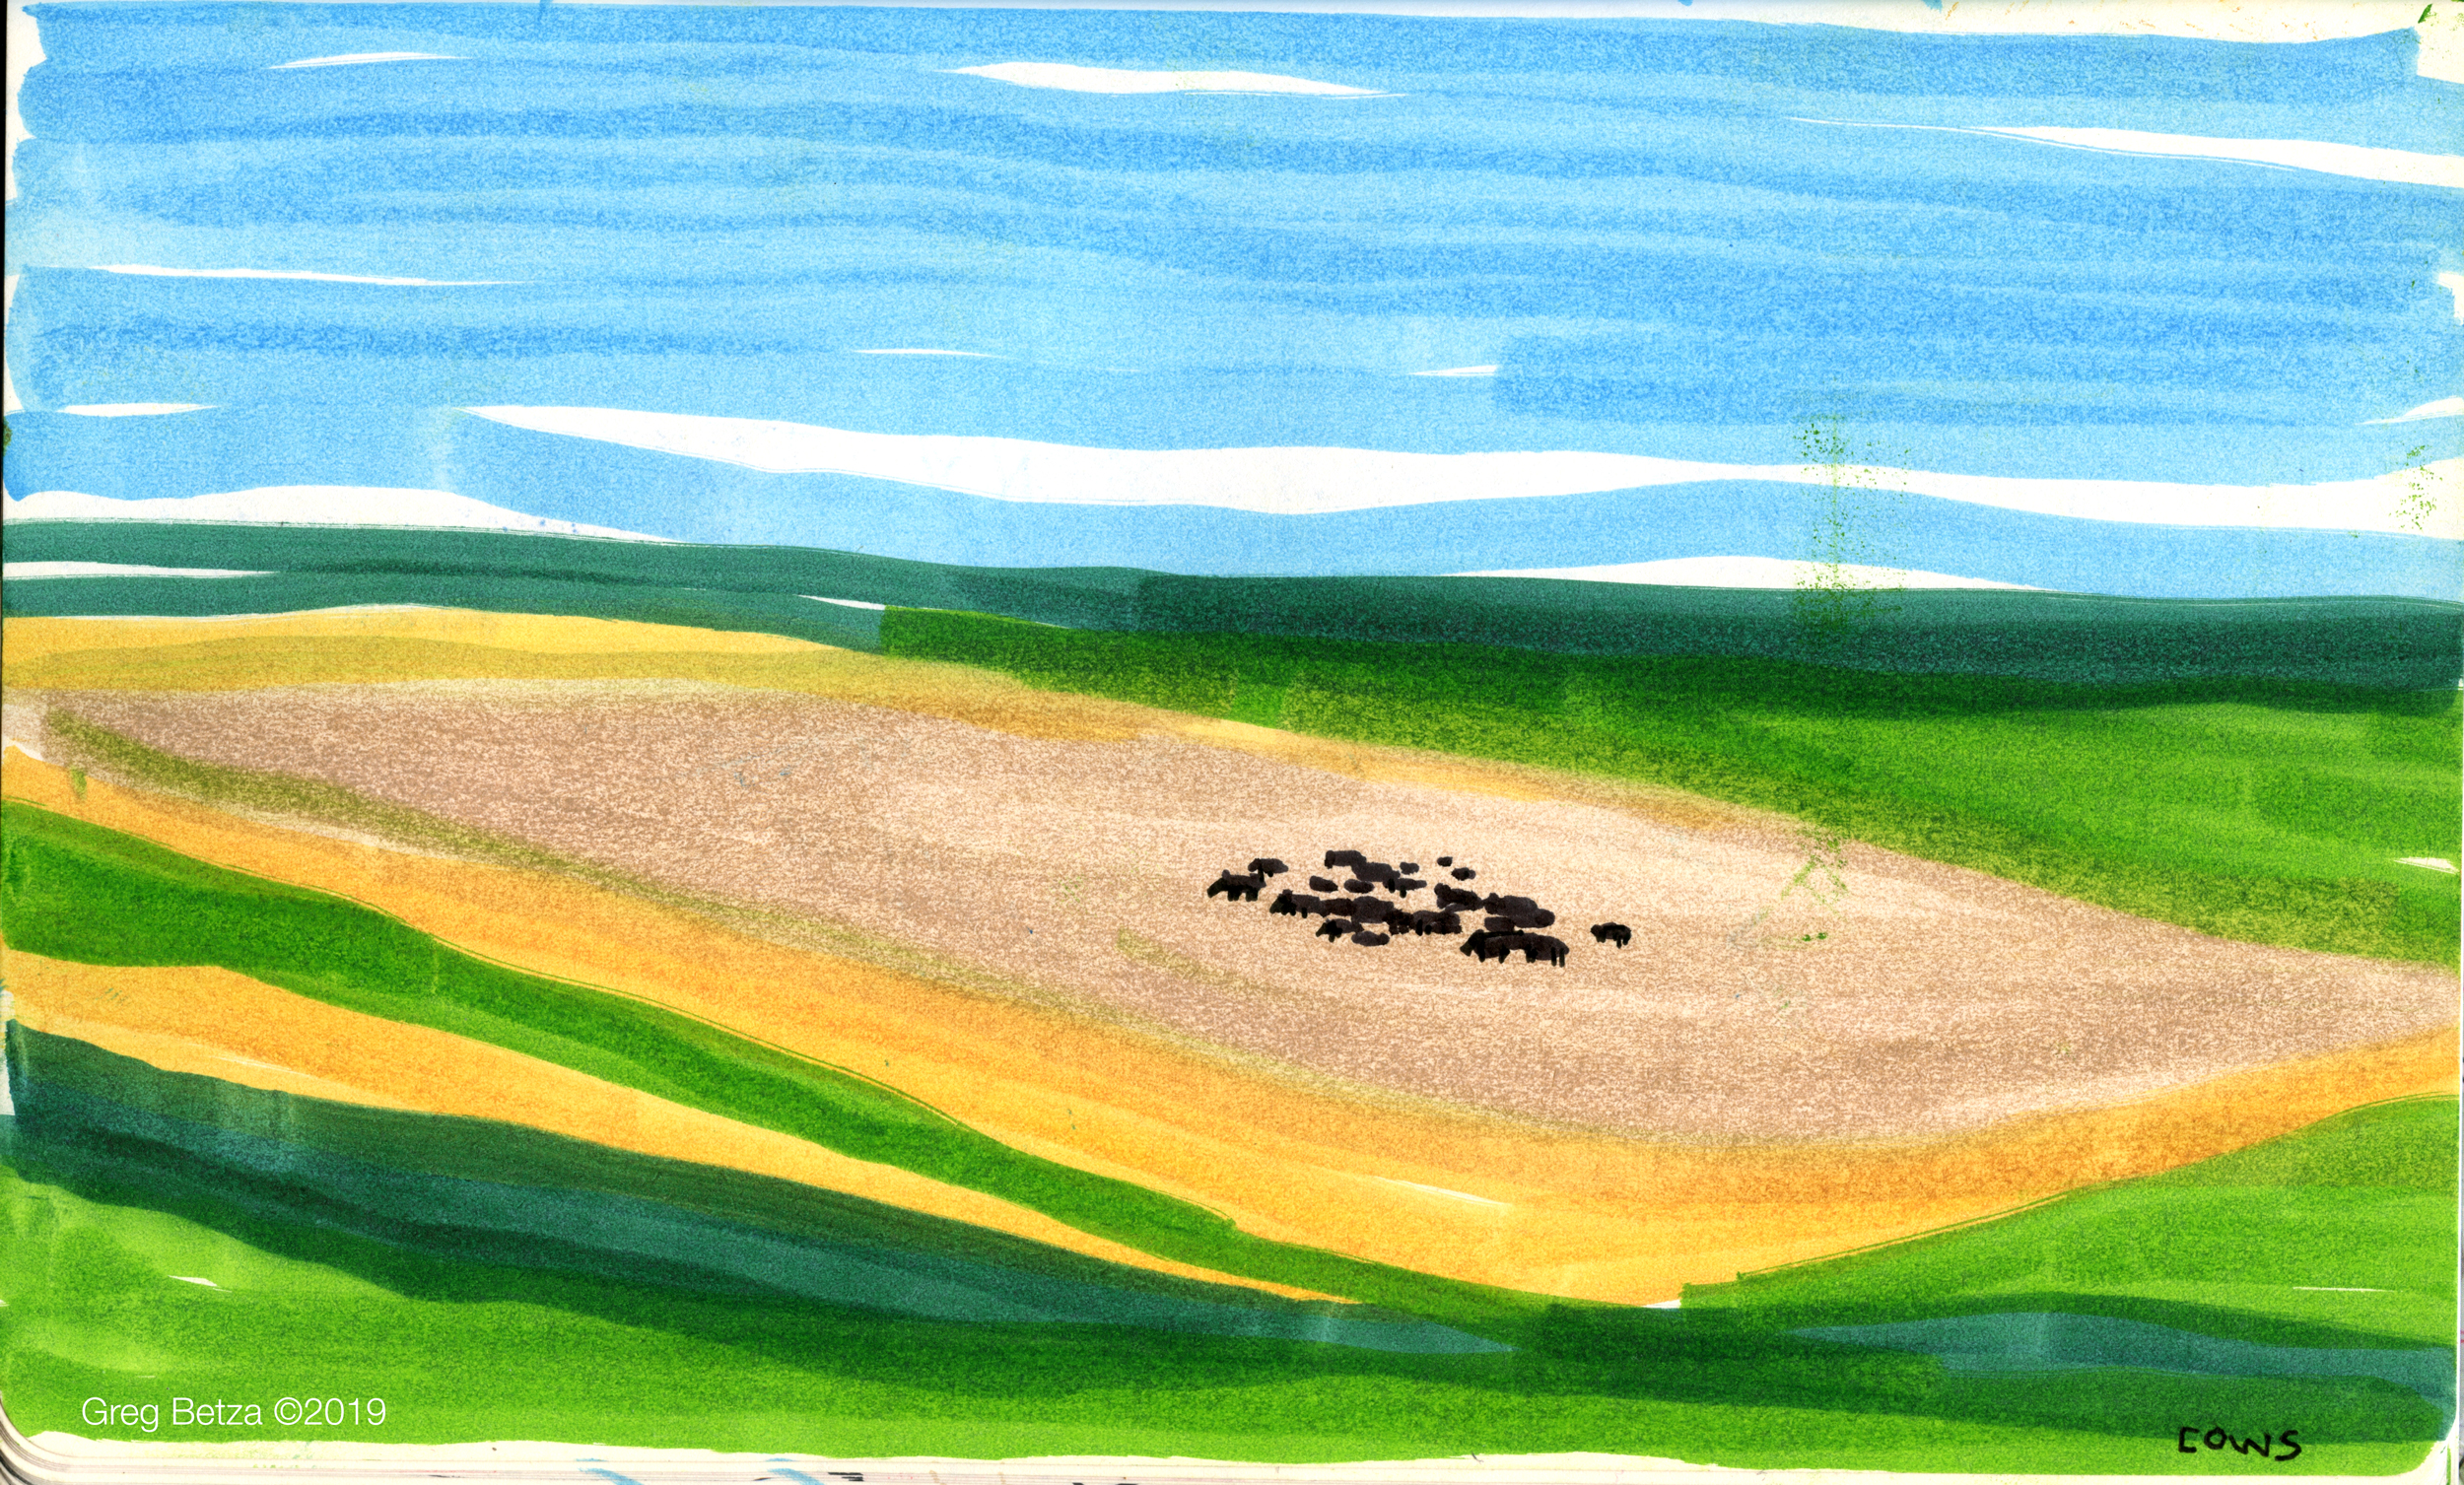 Kansas plains and cattle